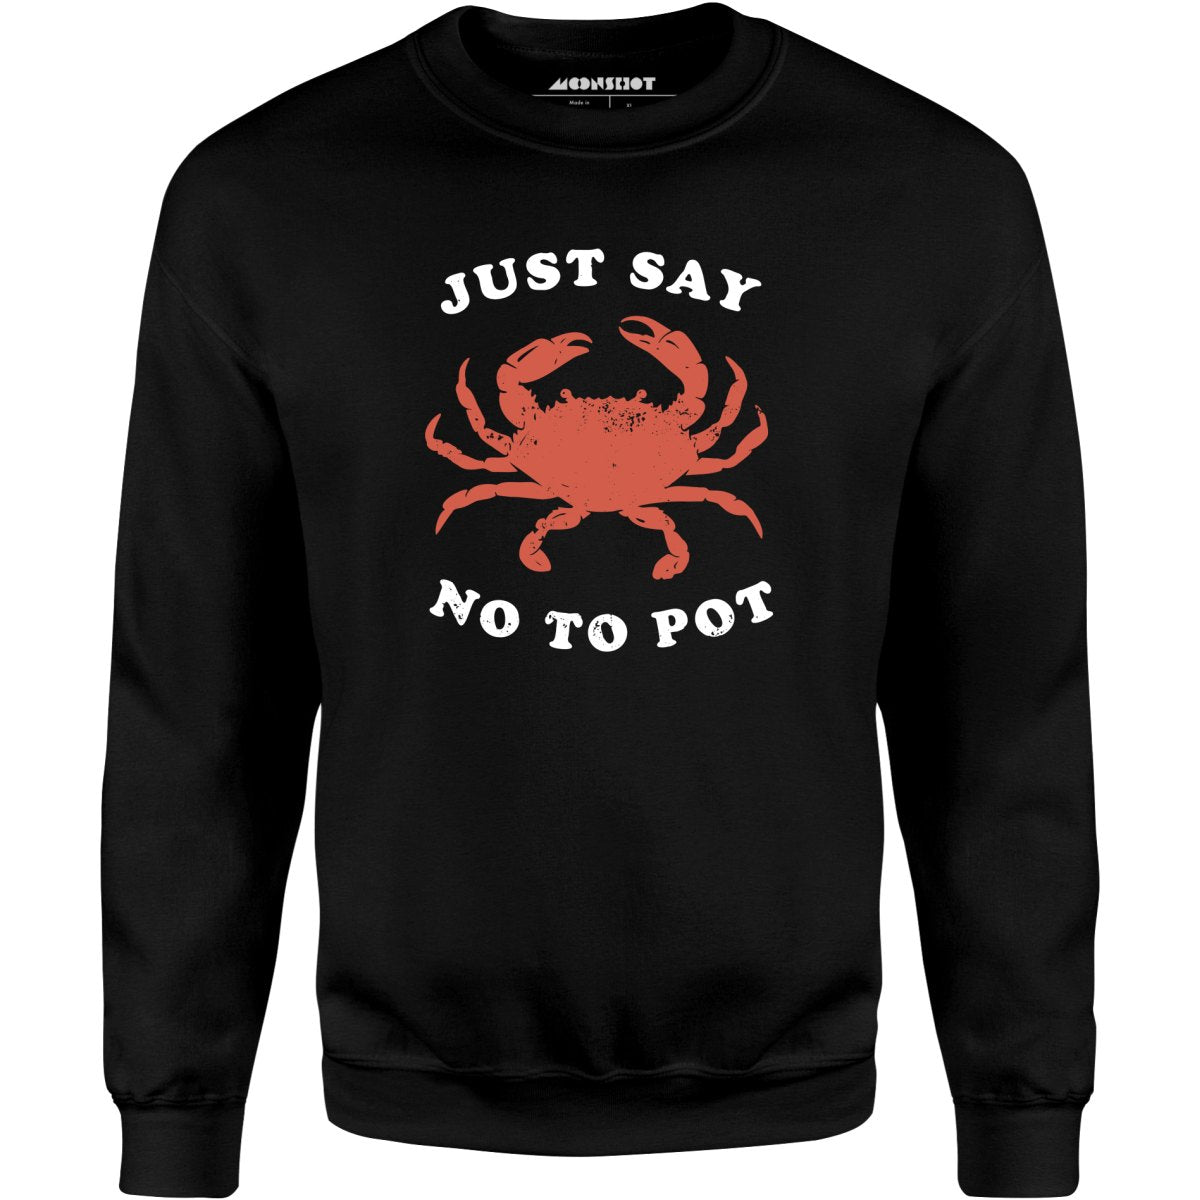 Just Say No To Pot - Unisex Sweatshirt